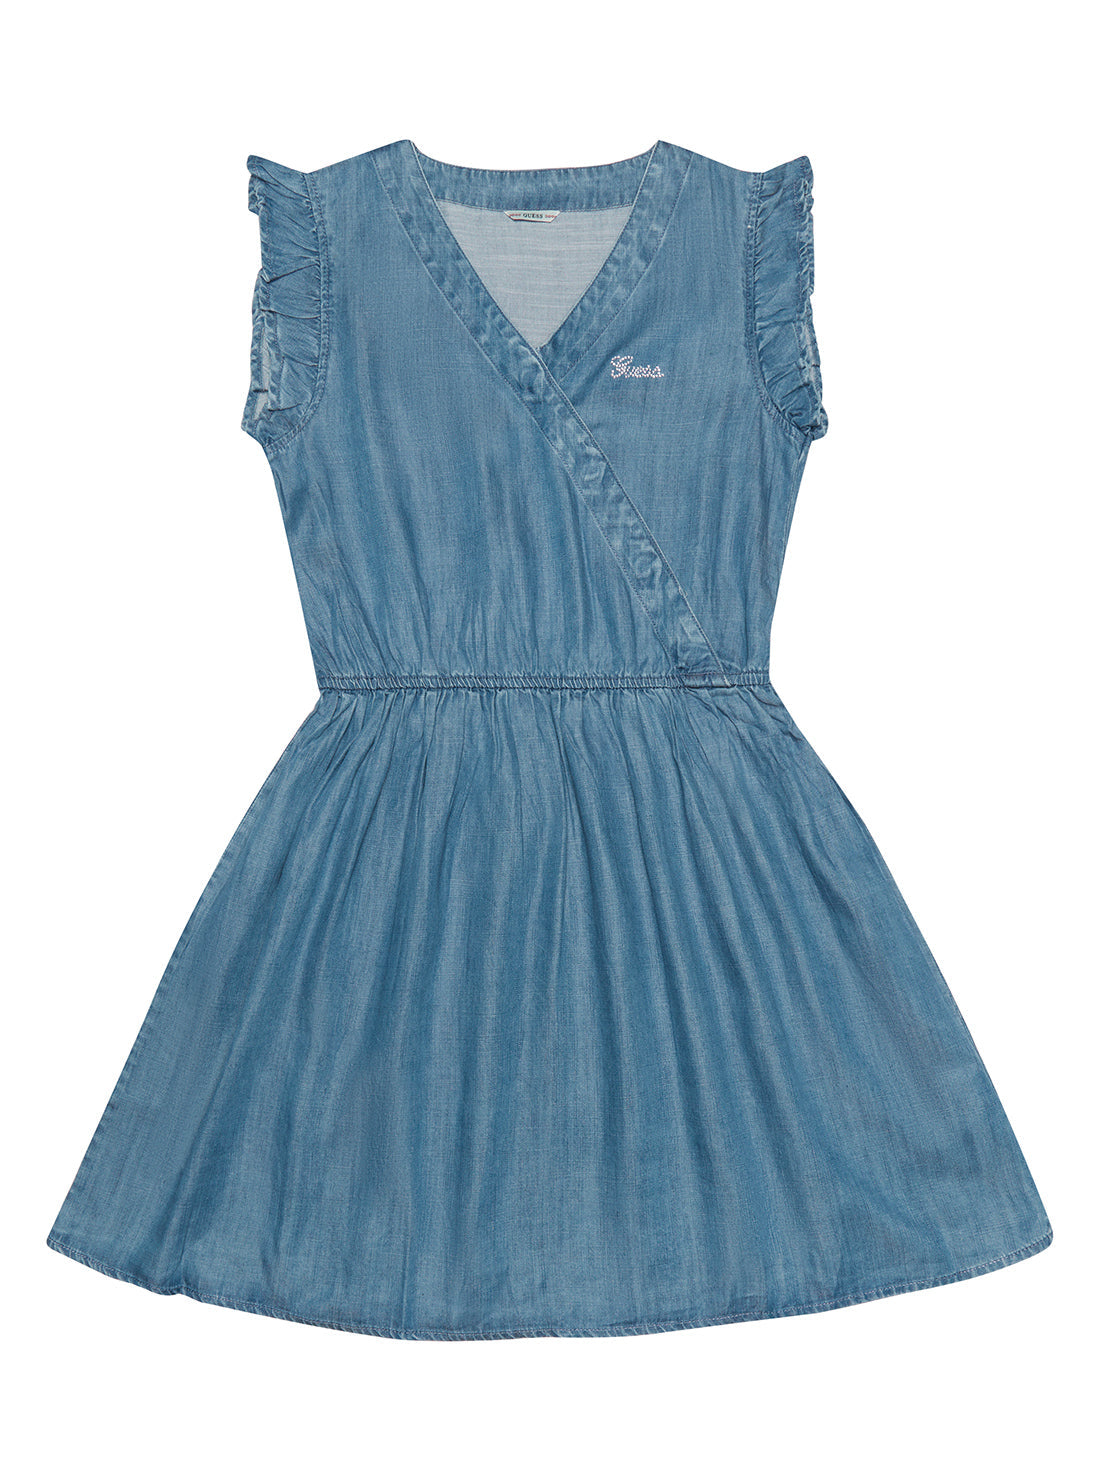 GUESS Big Girls Blue Denim Frill Dress Chambray (7-16) J2GK30D4MQ4 Front View